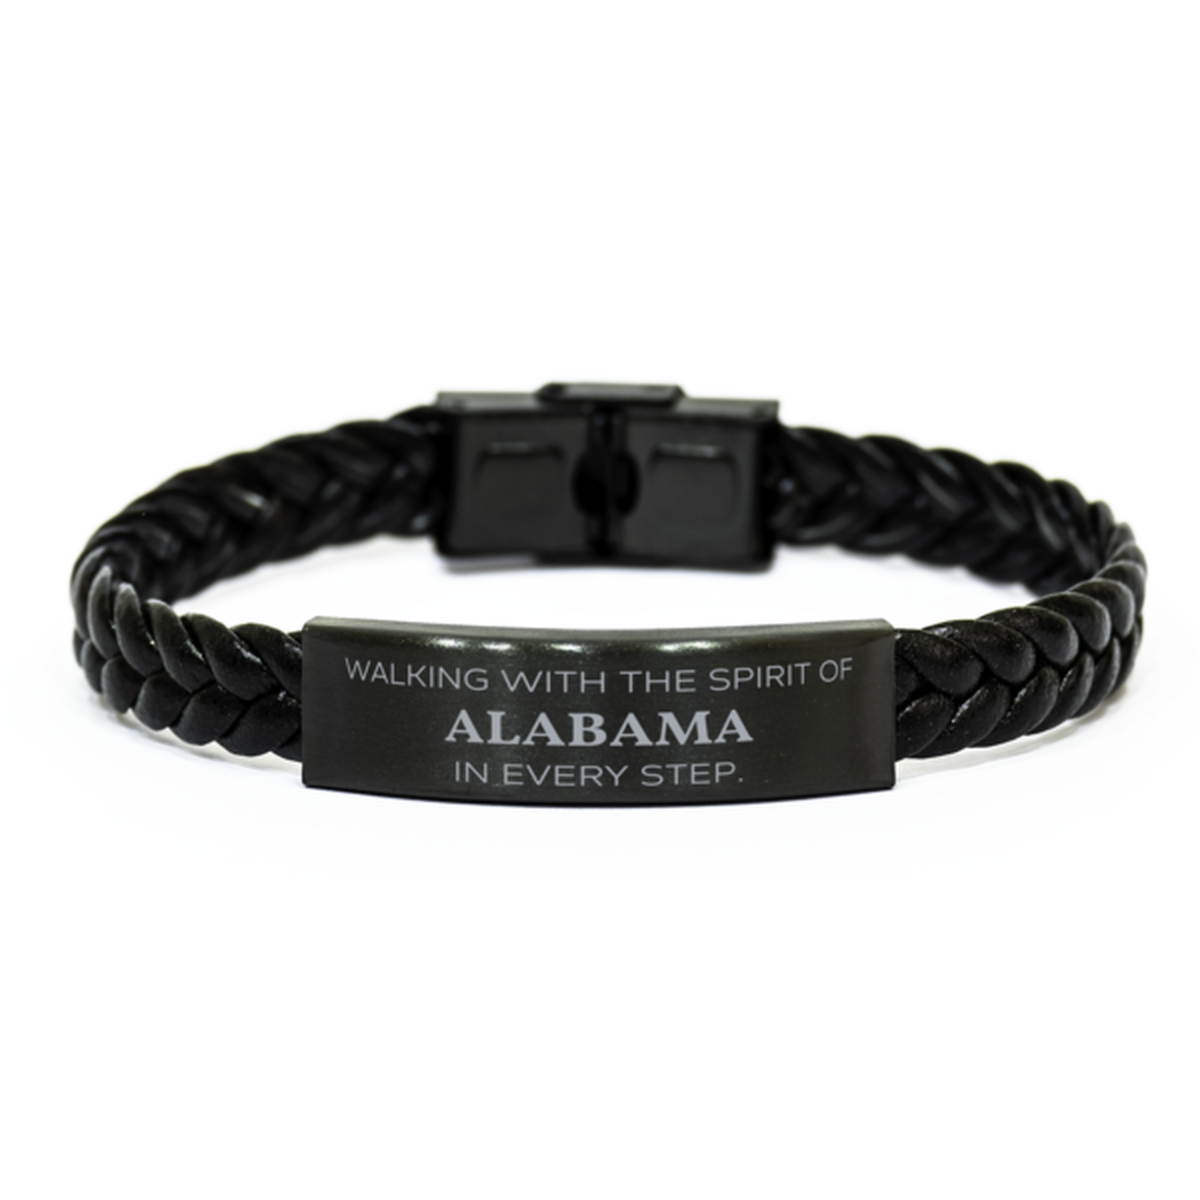 Alabama Gifts, Walking with the spirit, Love Alabama Birthday Christmas Braided Leather Bracelet For Alabama People, Men, Women, Friends